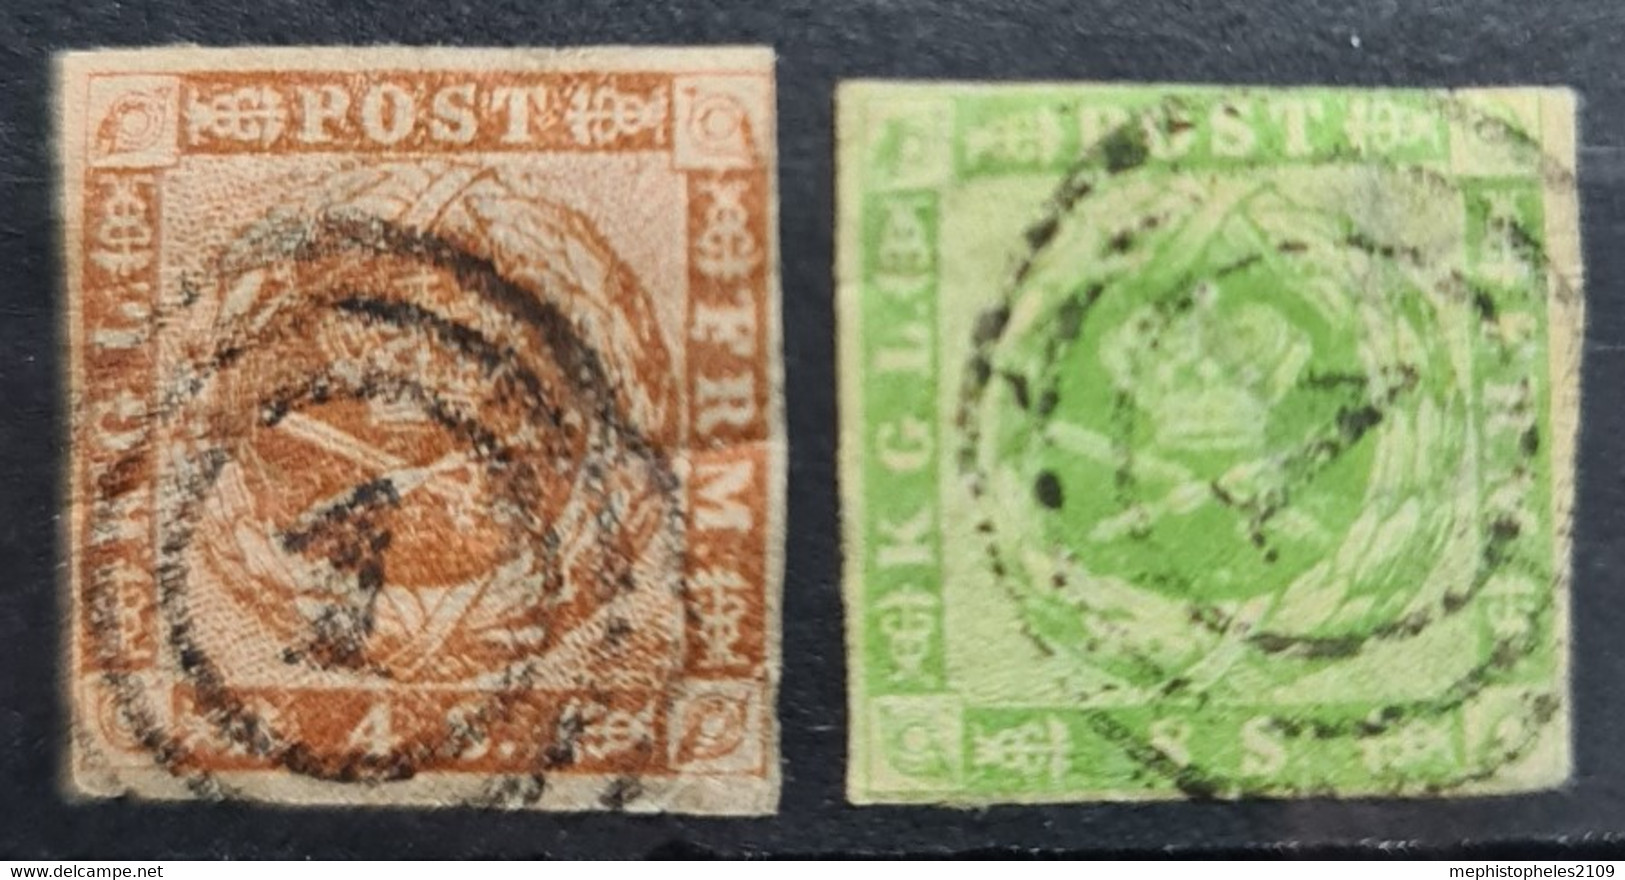 DENMARK 1858/62 - Canceled - Sc# 4, 5 - Used Stamps